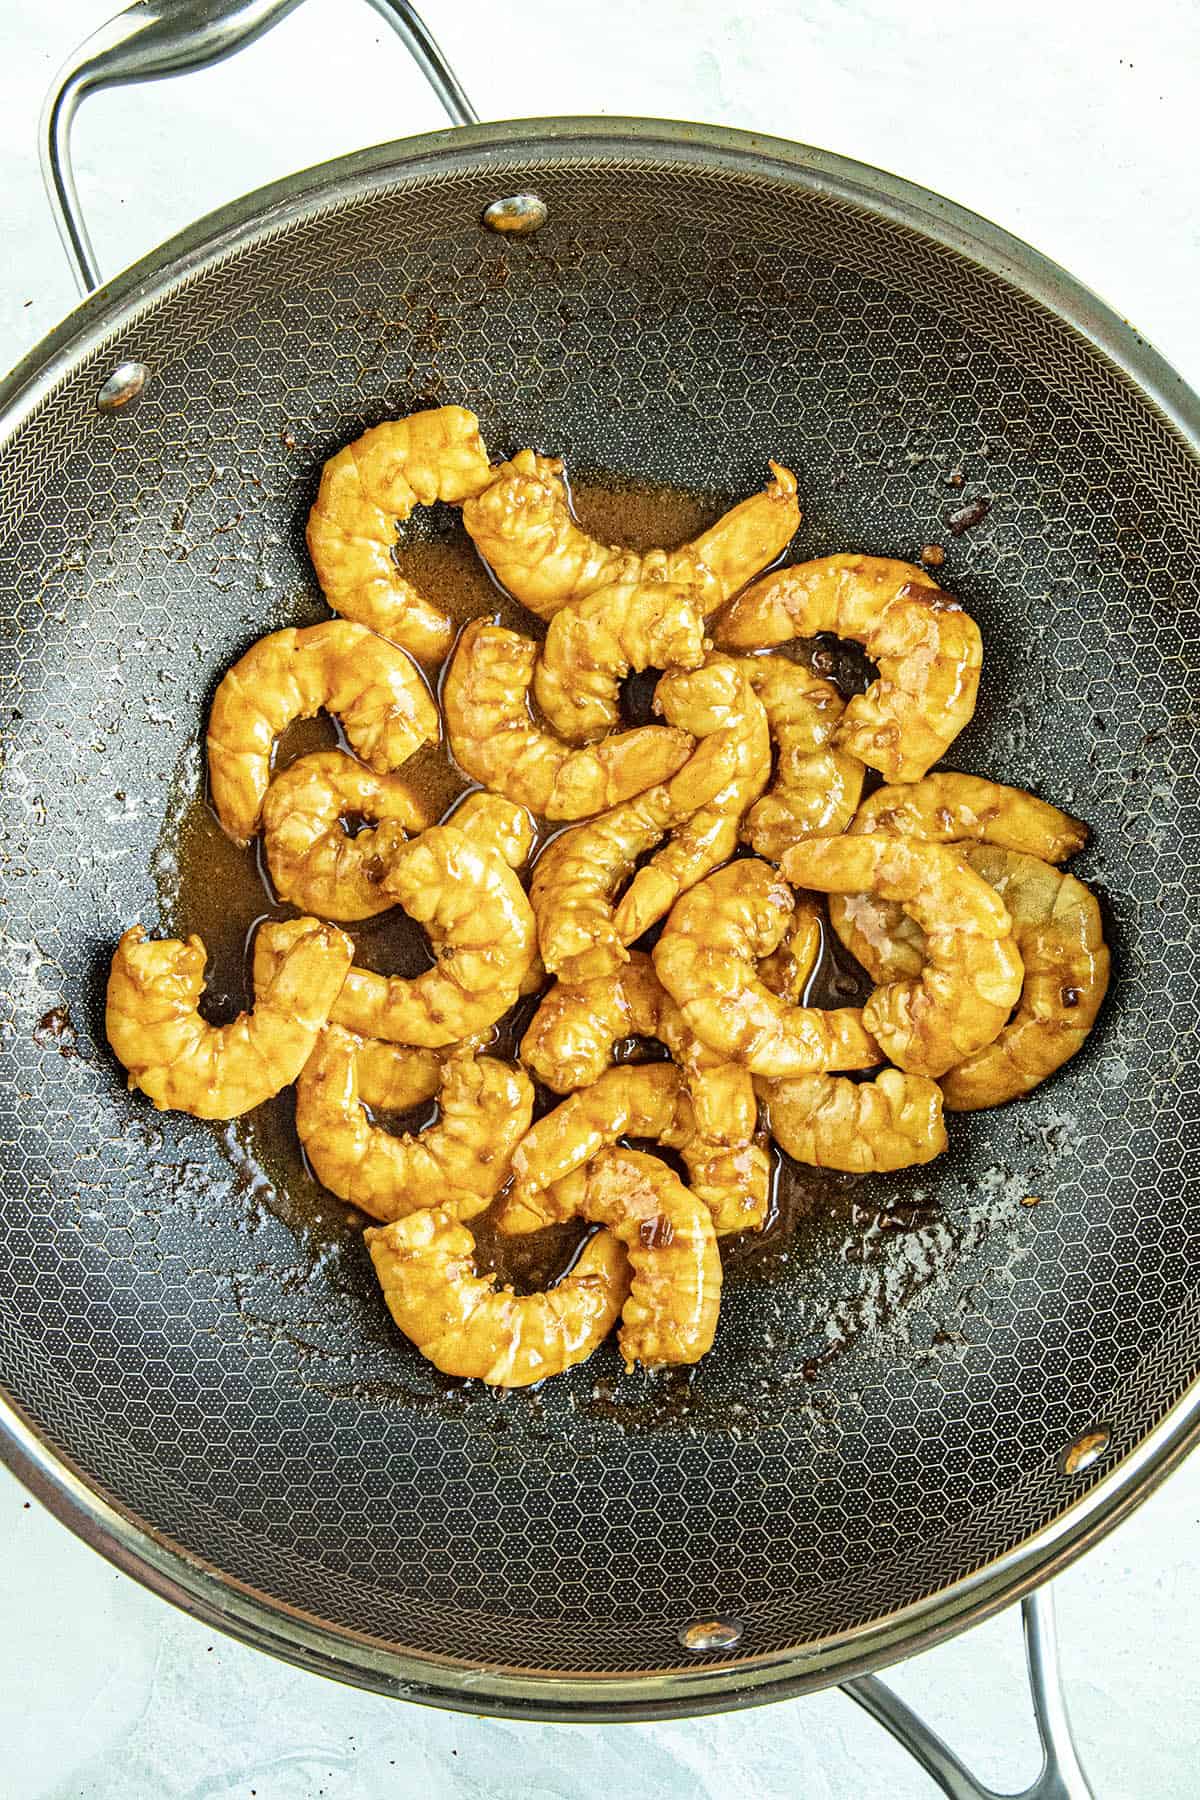 Stir frying marinated shrimp to make Kung Pao Shrimp